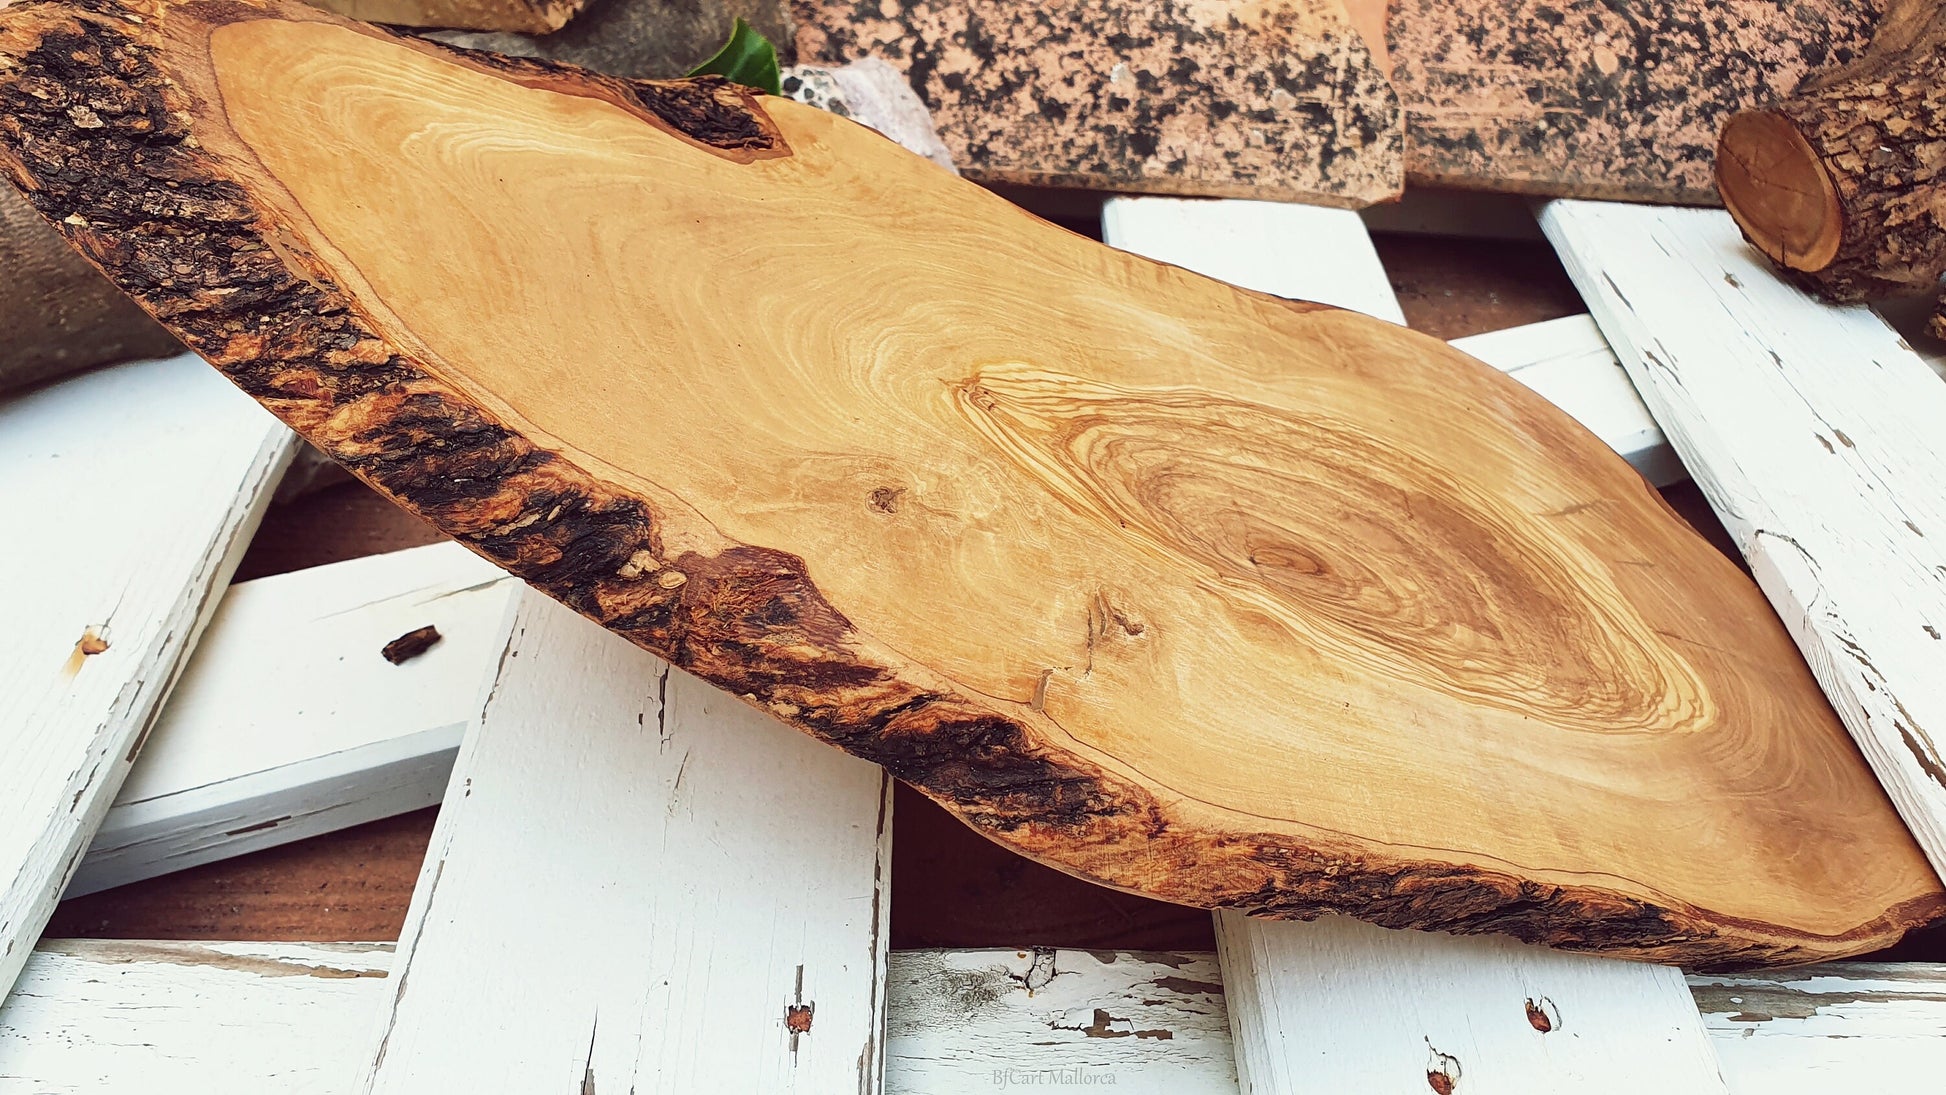 Custom Natural Edge Cutting Board, Rustic Olive Wood Charcuterie